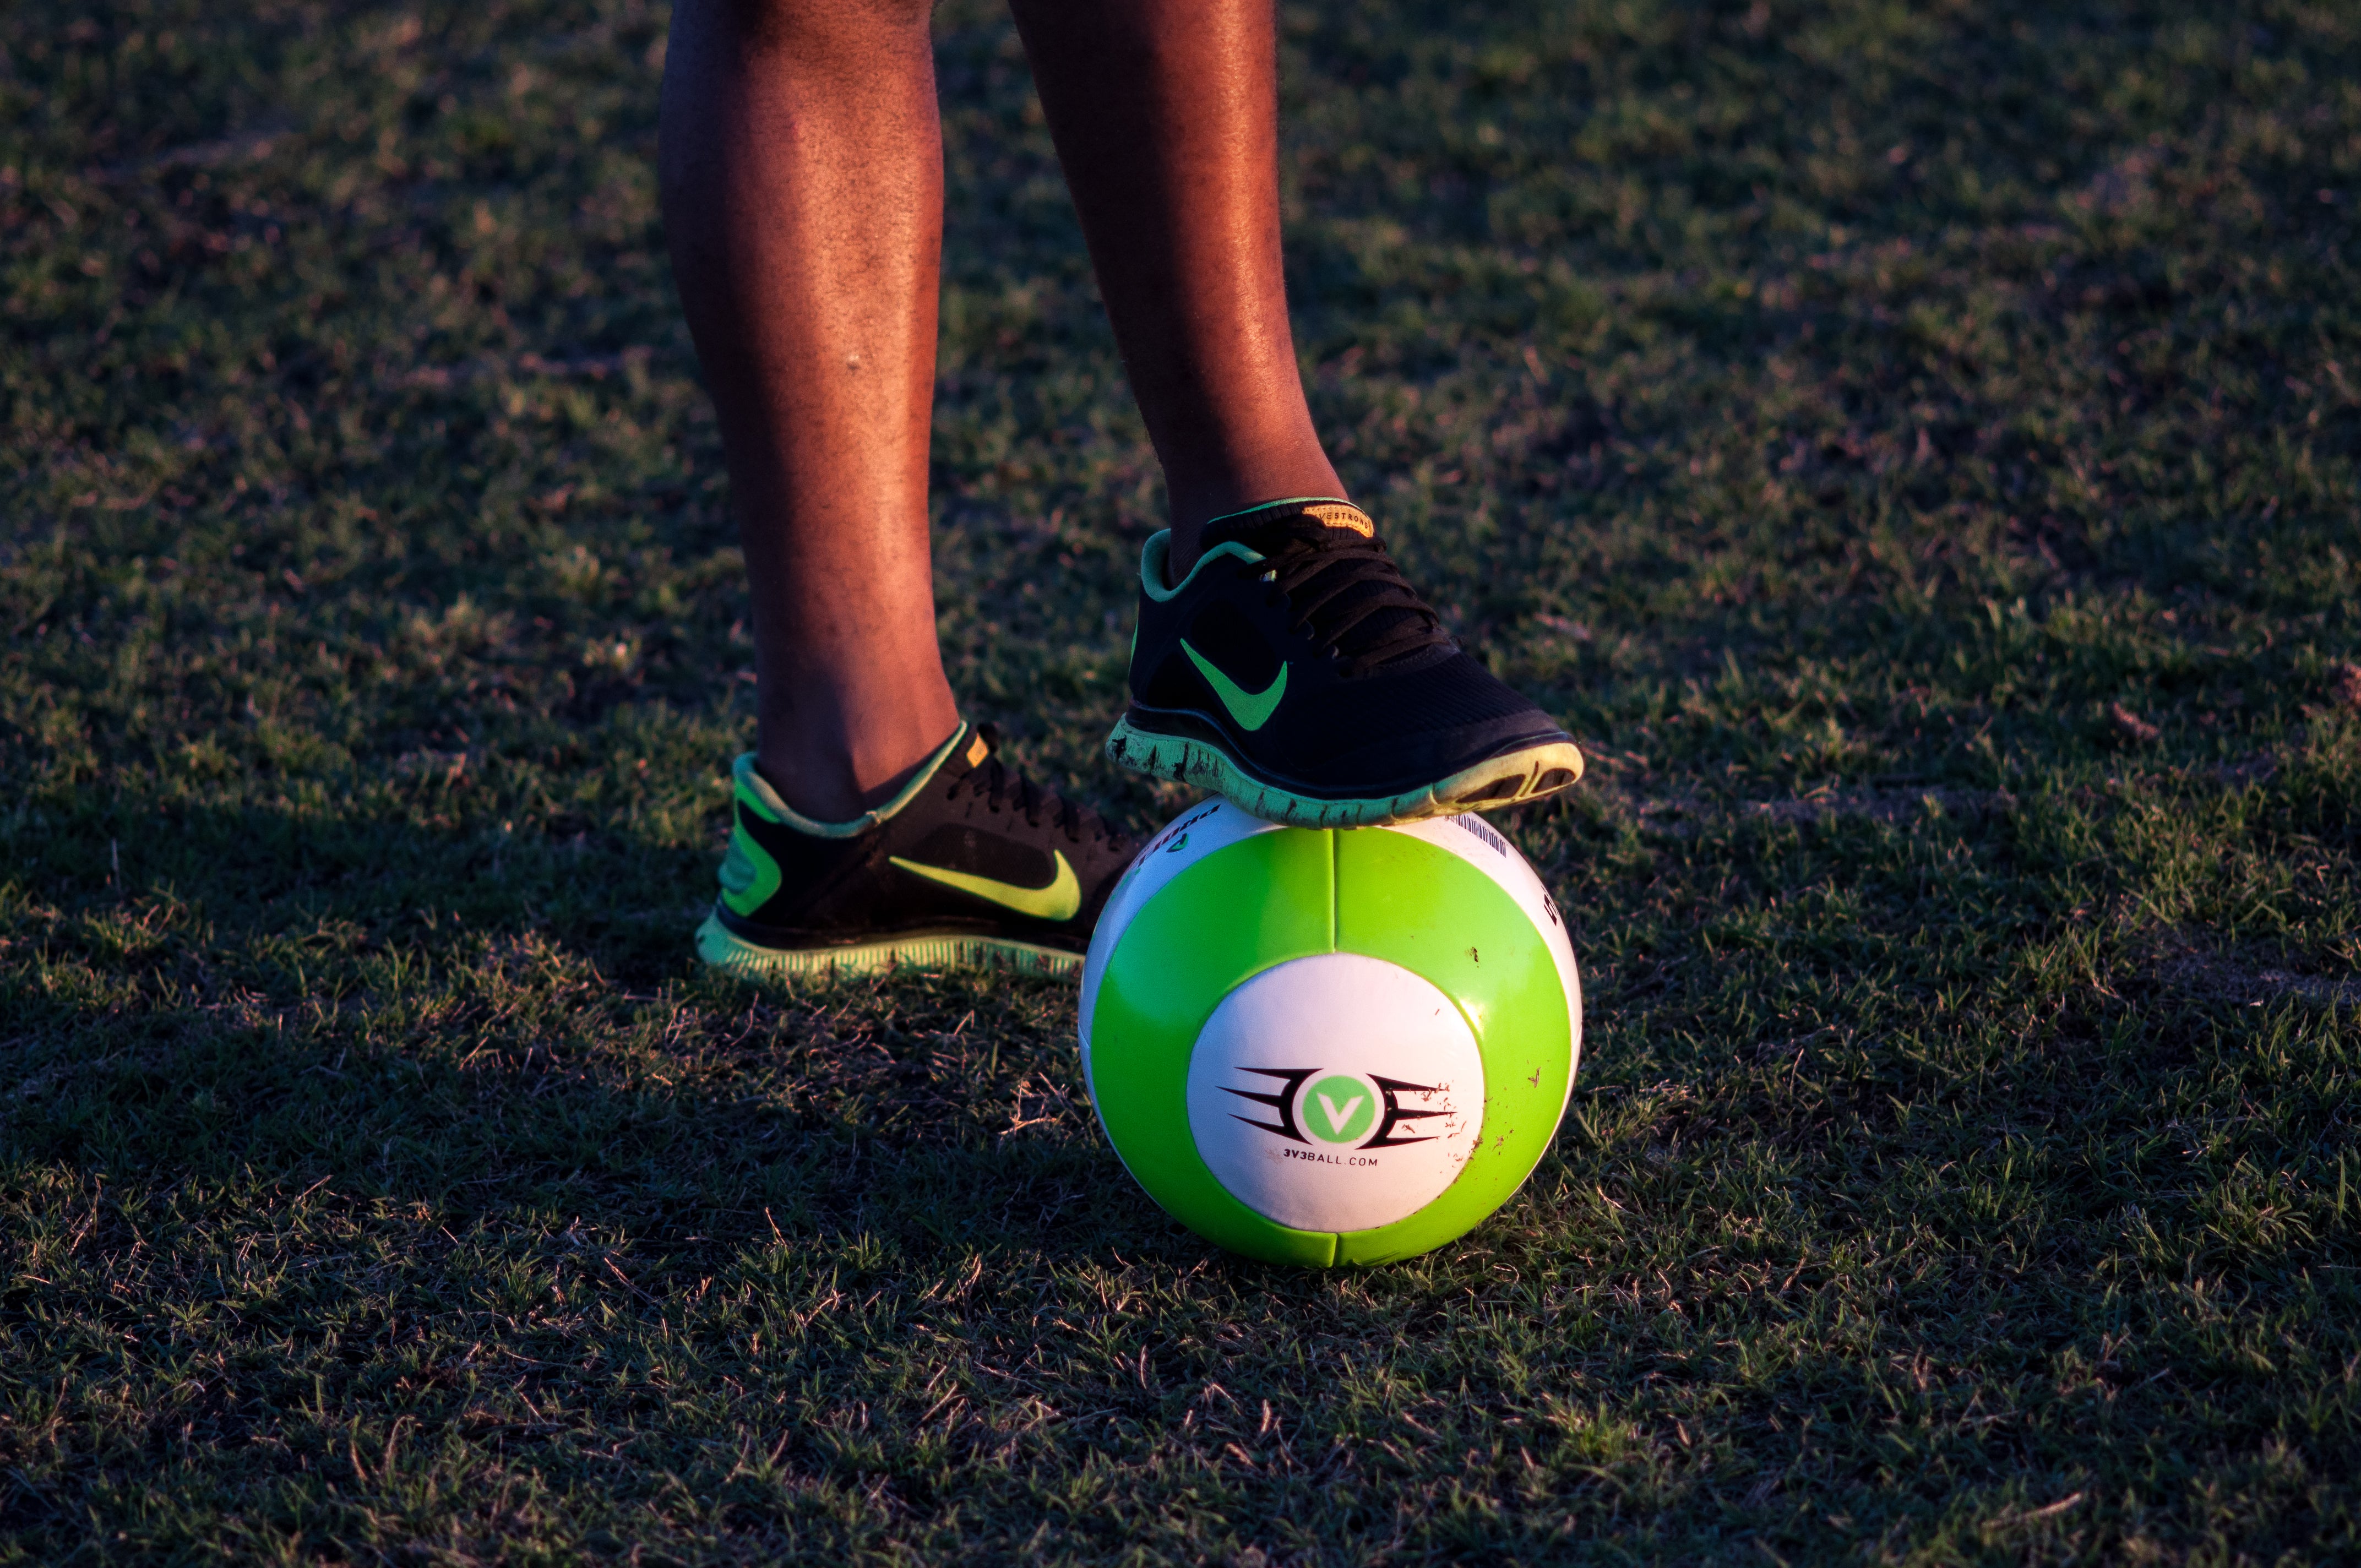 Check out our 3v3 soccer balls